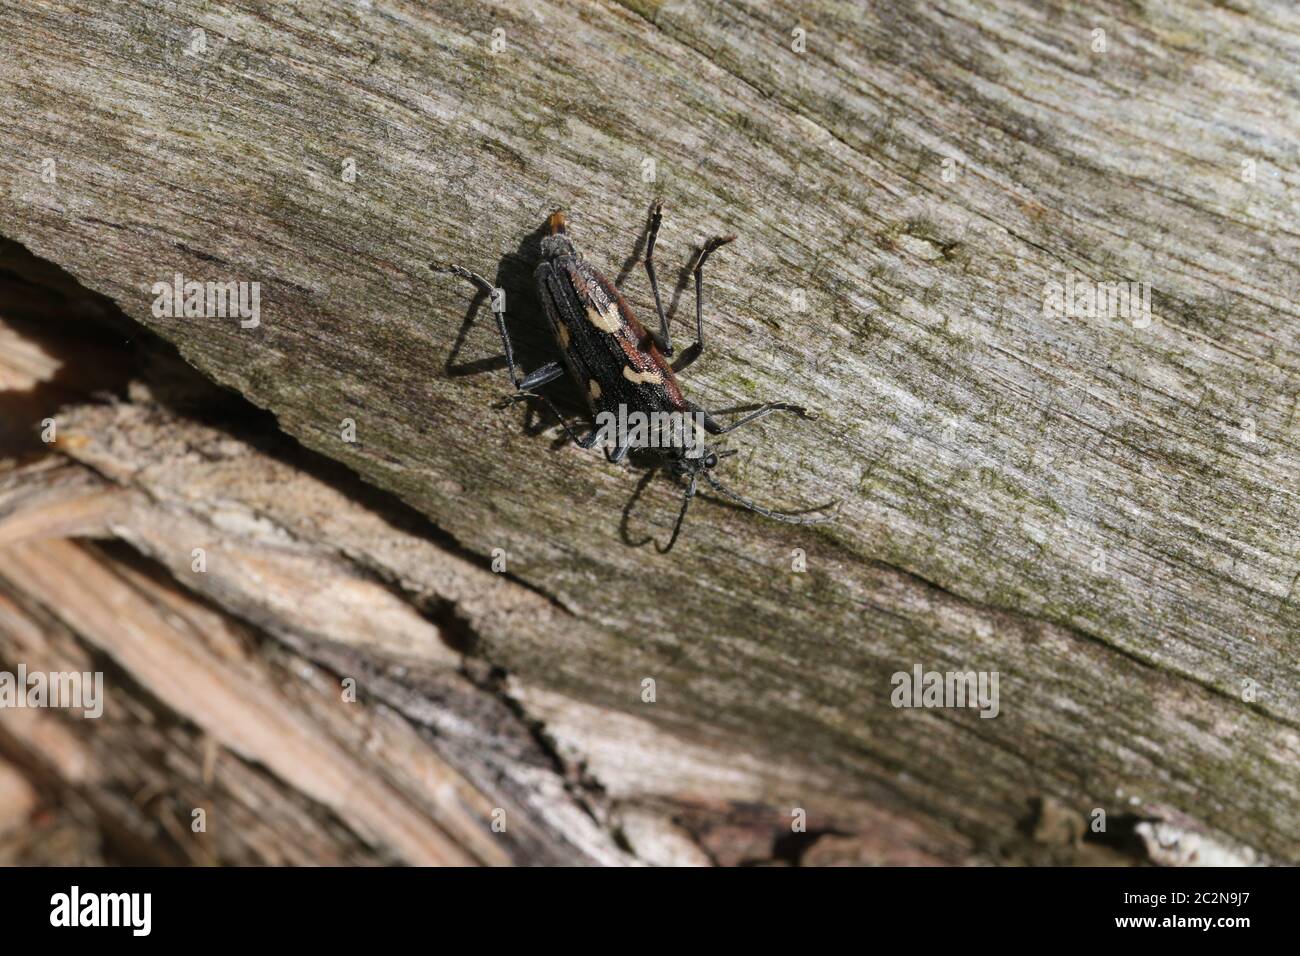 A specimen of Rhagium bifasciatum (Two-banded Longhorn Beetle), exploring the main trunk of a fallen Pine tree (Pinus sp.) Stock Photo